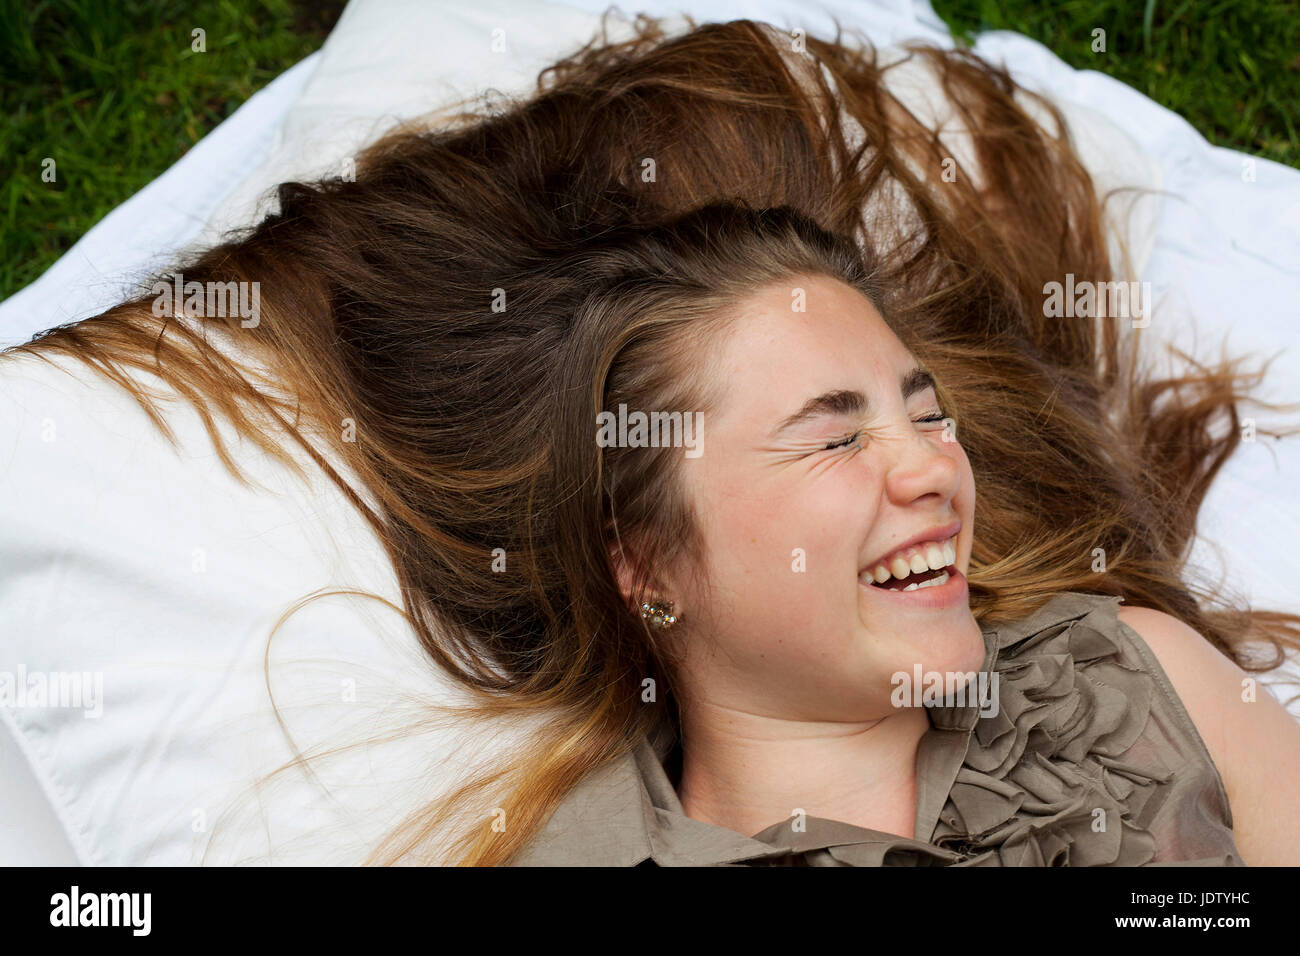 Teenage girl laughing on pillows Stock Photo